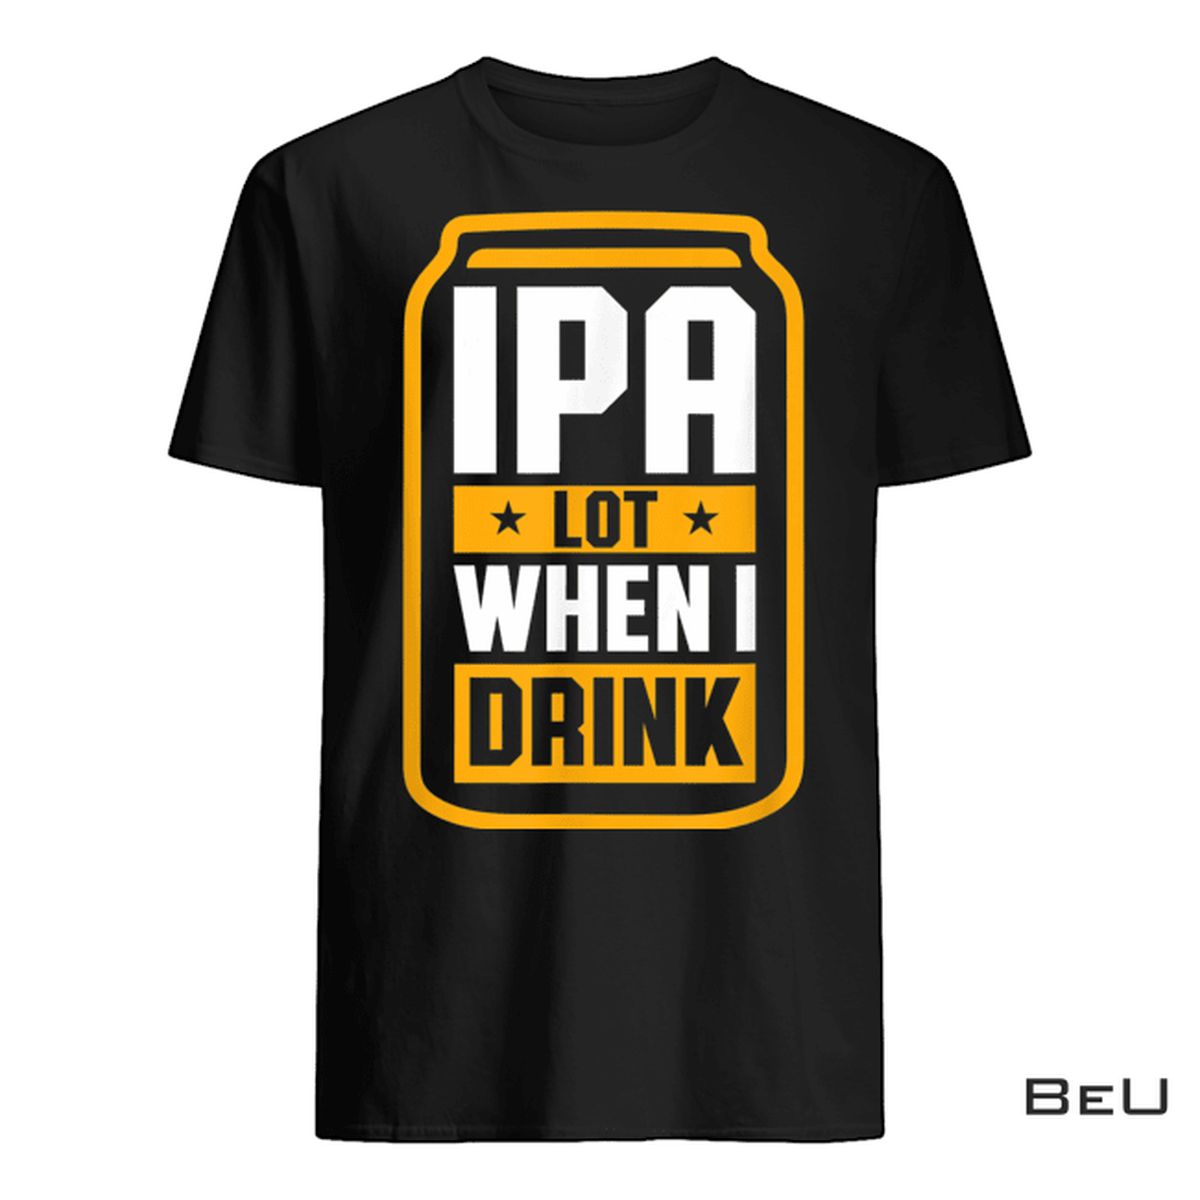 Ipa Lot When I Drink Shirt